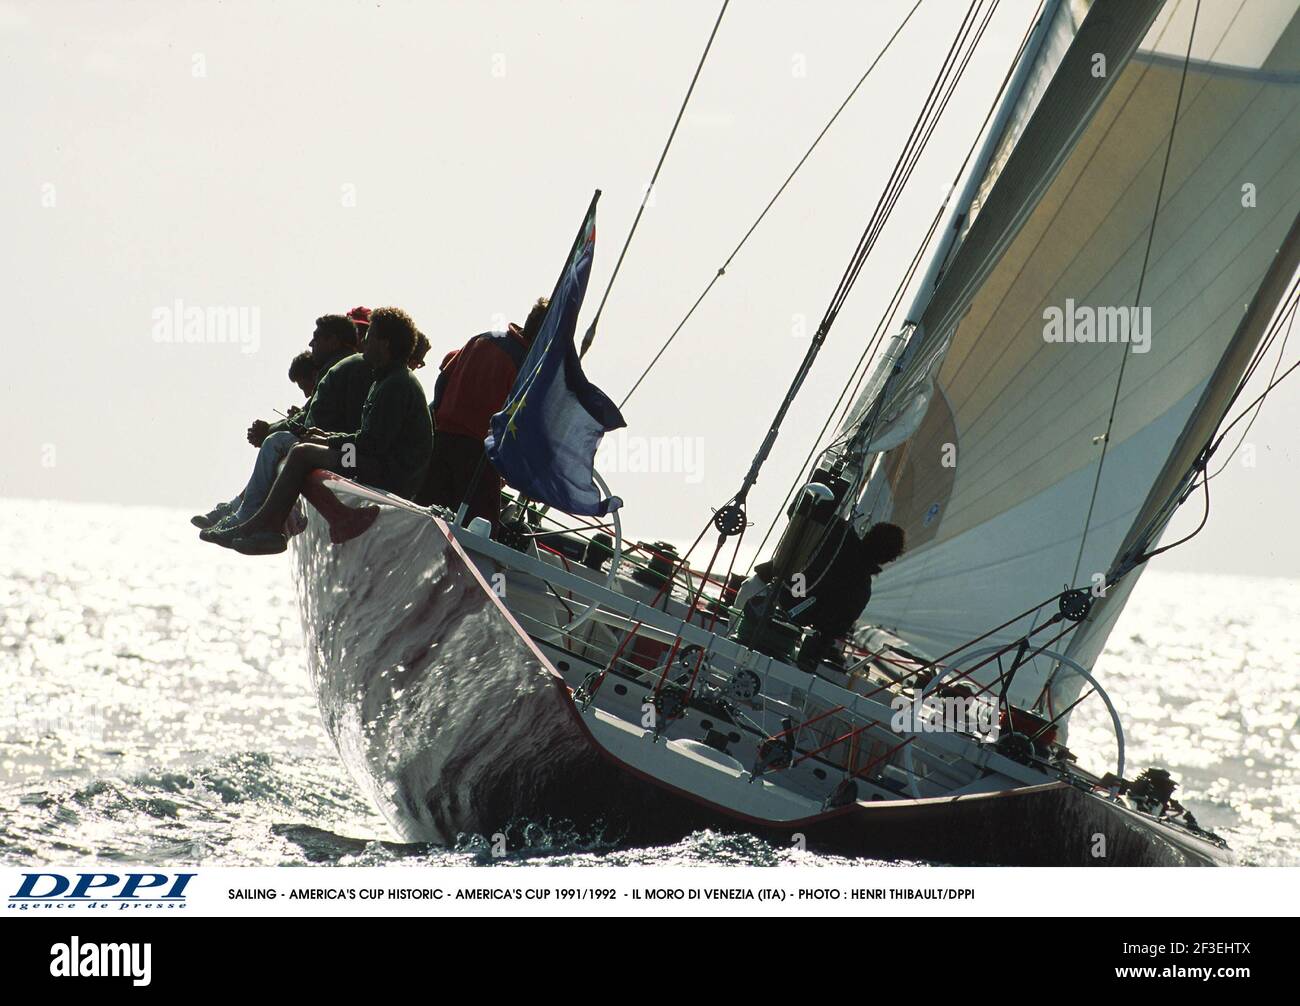 One Australia Sailing Challenging The World 1994 Vintage World Cup Sai –  PosterAmerica